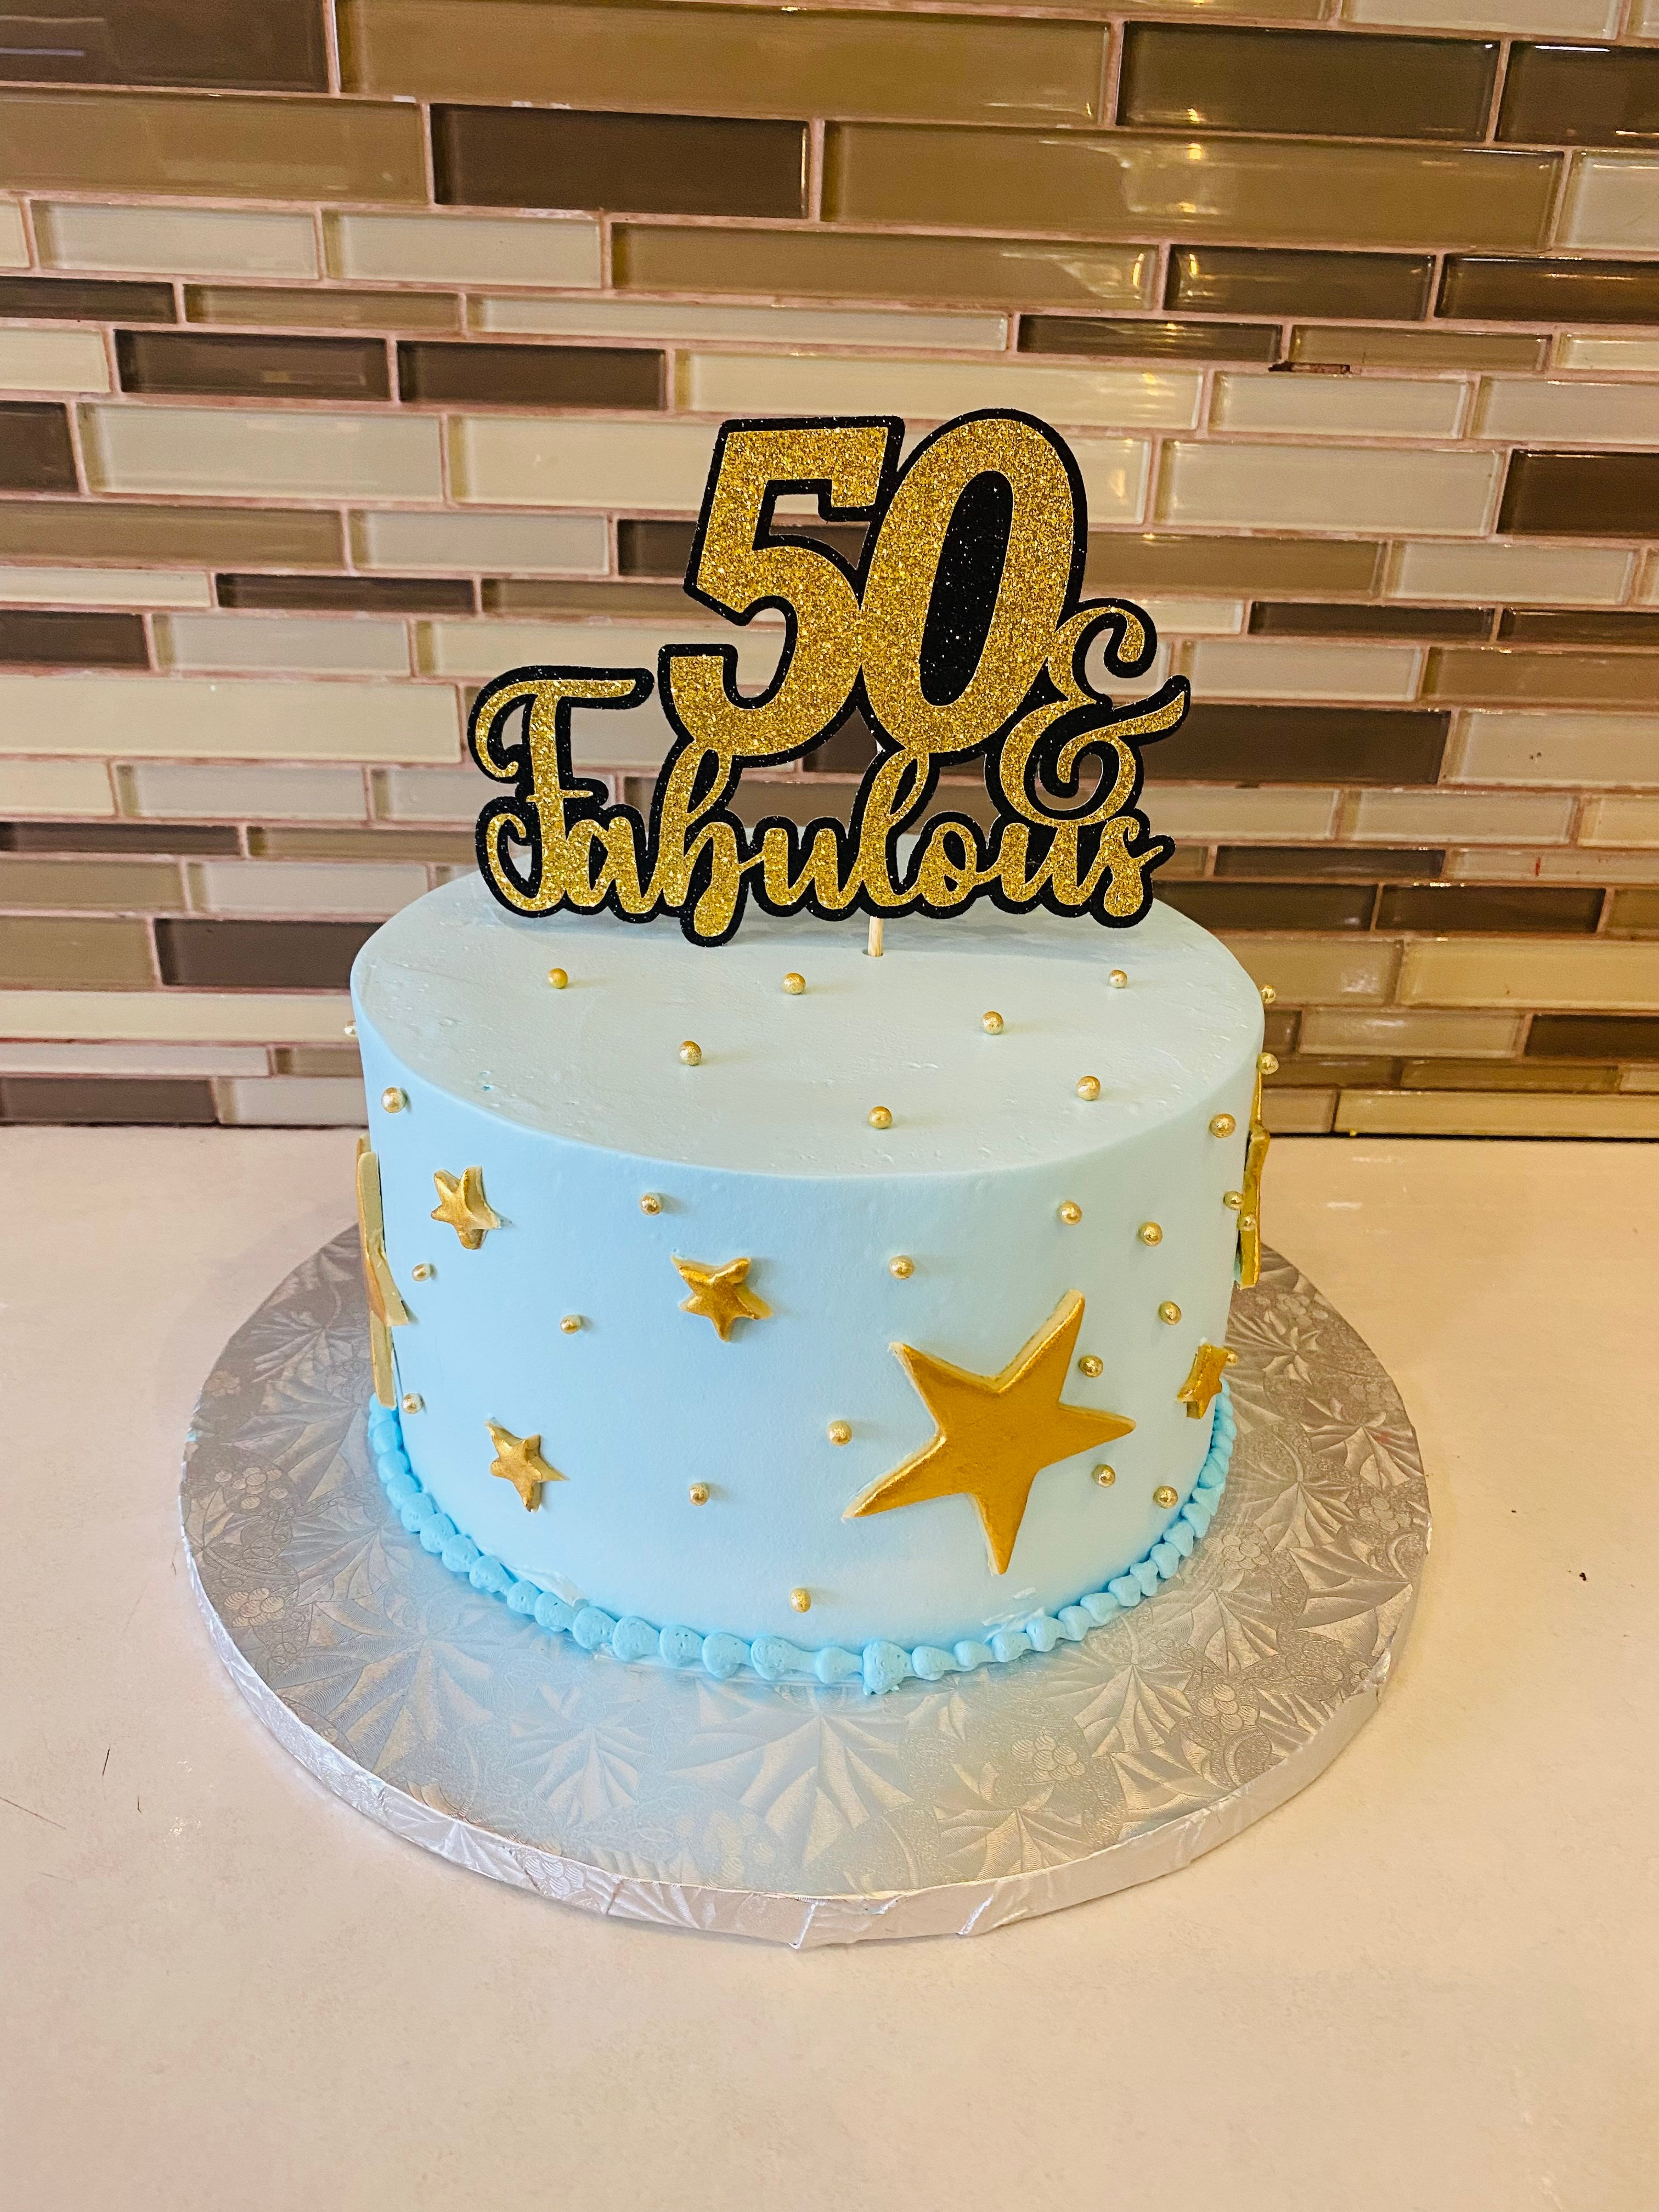 ALL Birthday Cakes tagged "50-year" - Rashmi's Bakery